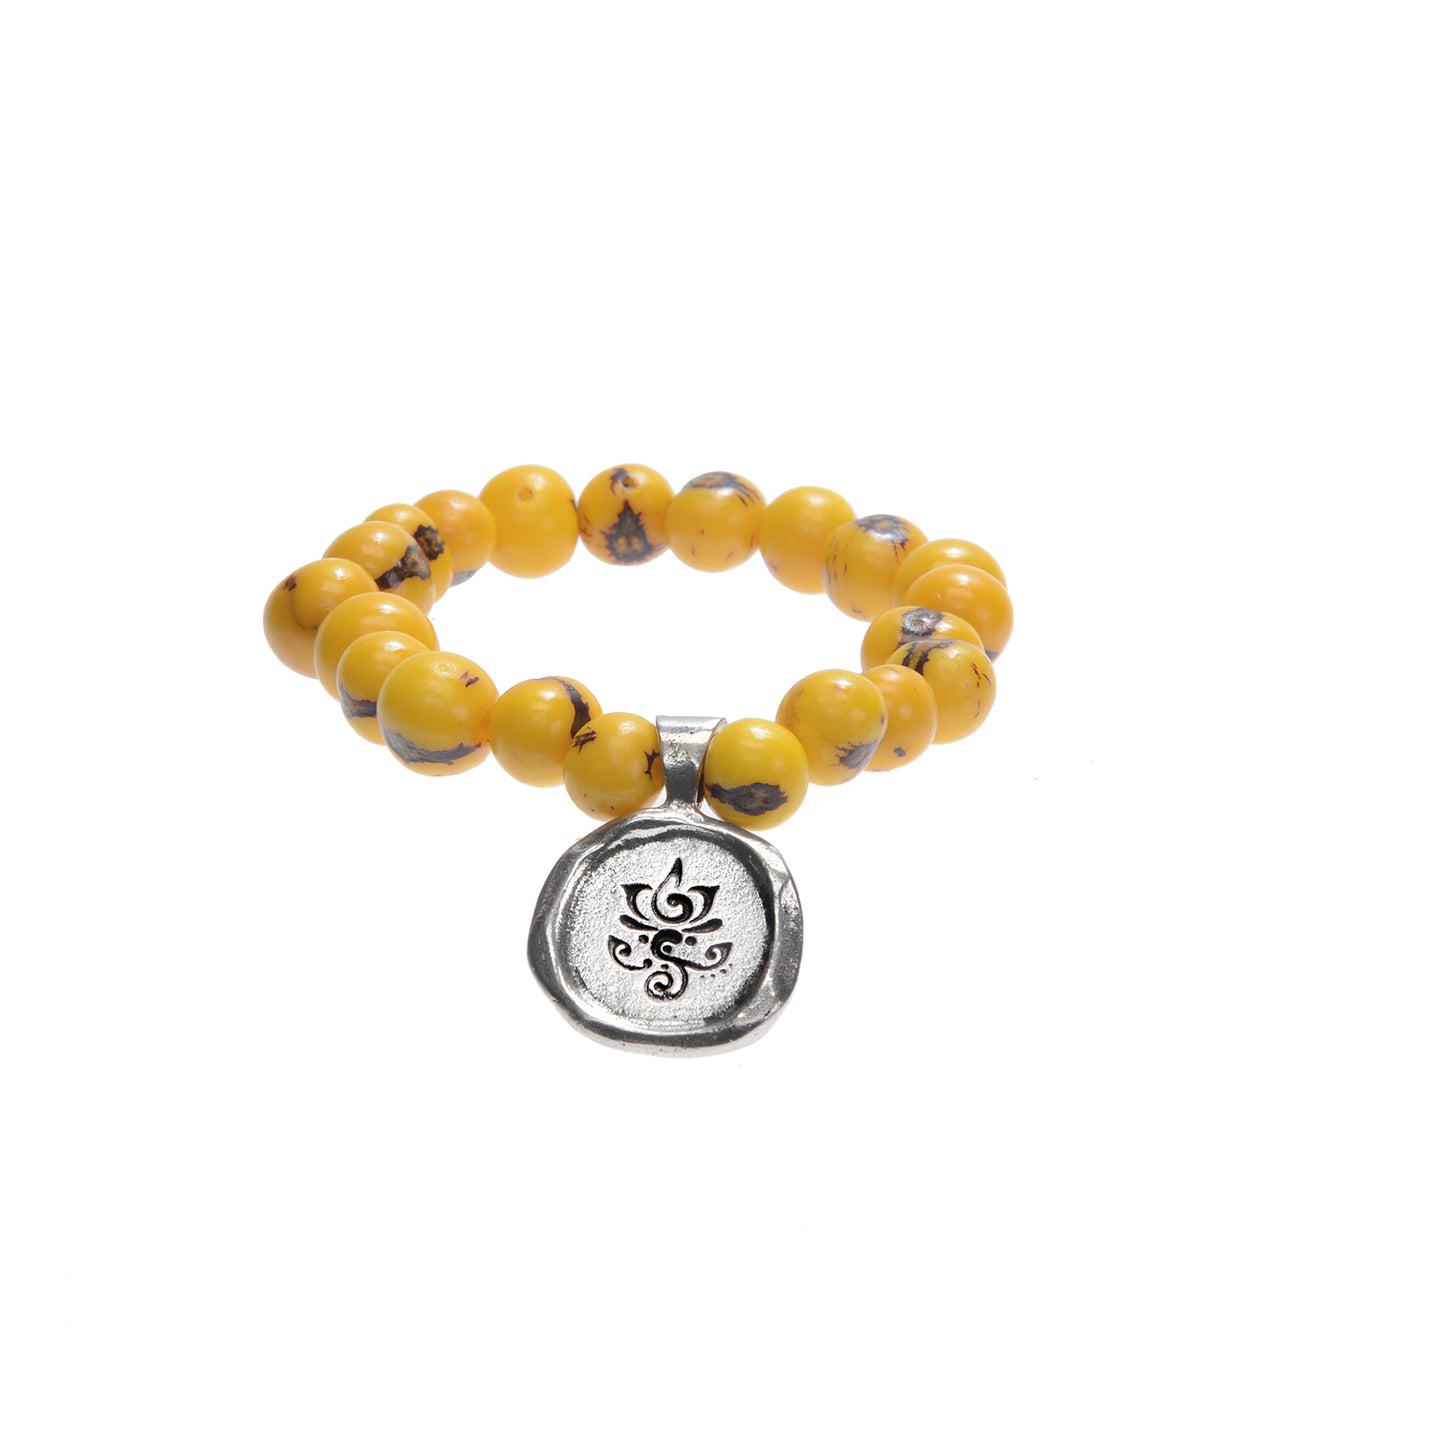 Acai Seeds Of Life Bracelet with Wax Seal - Yellow Beads